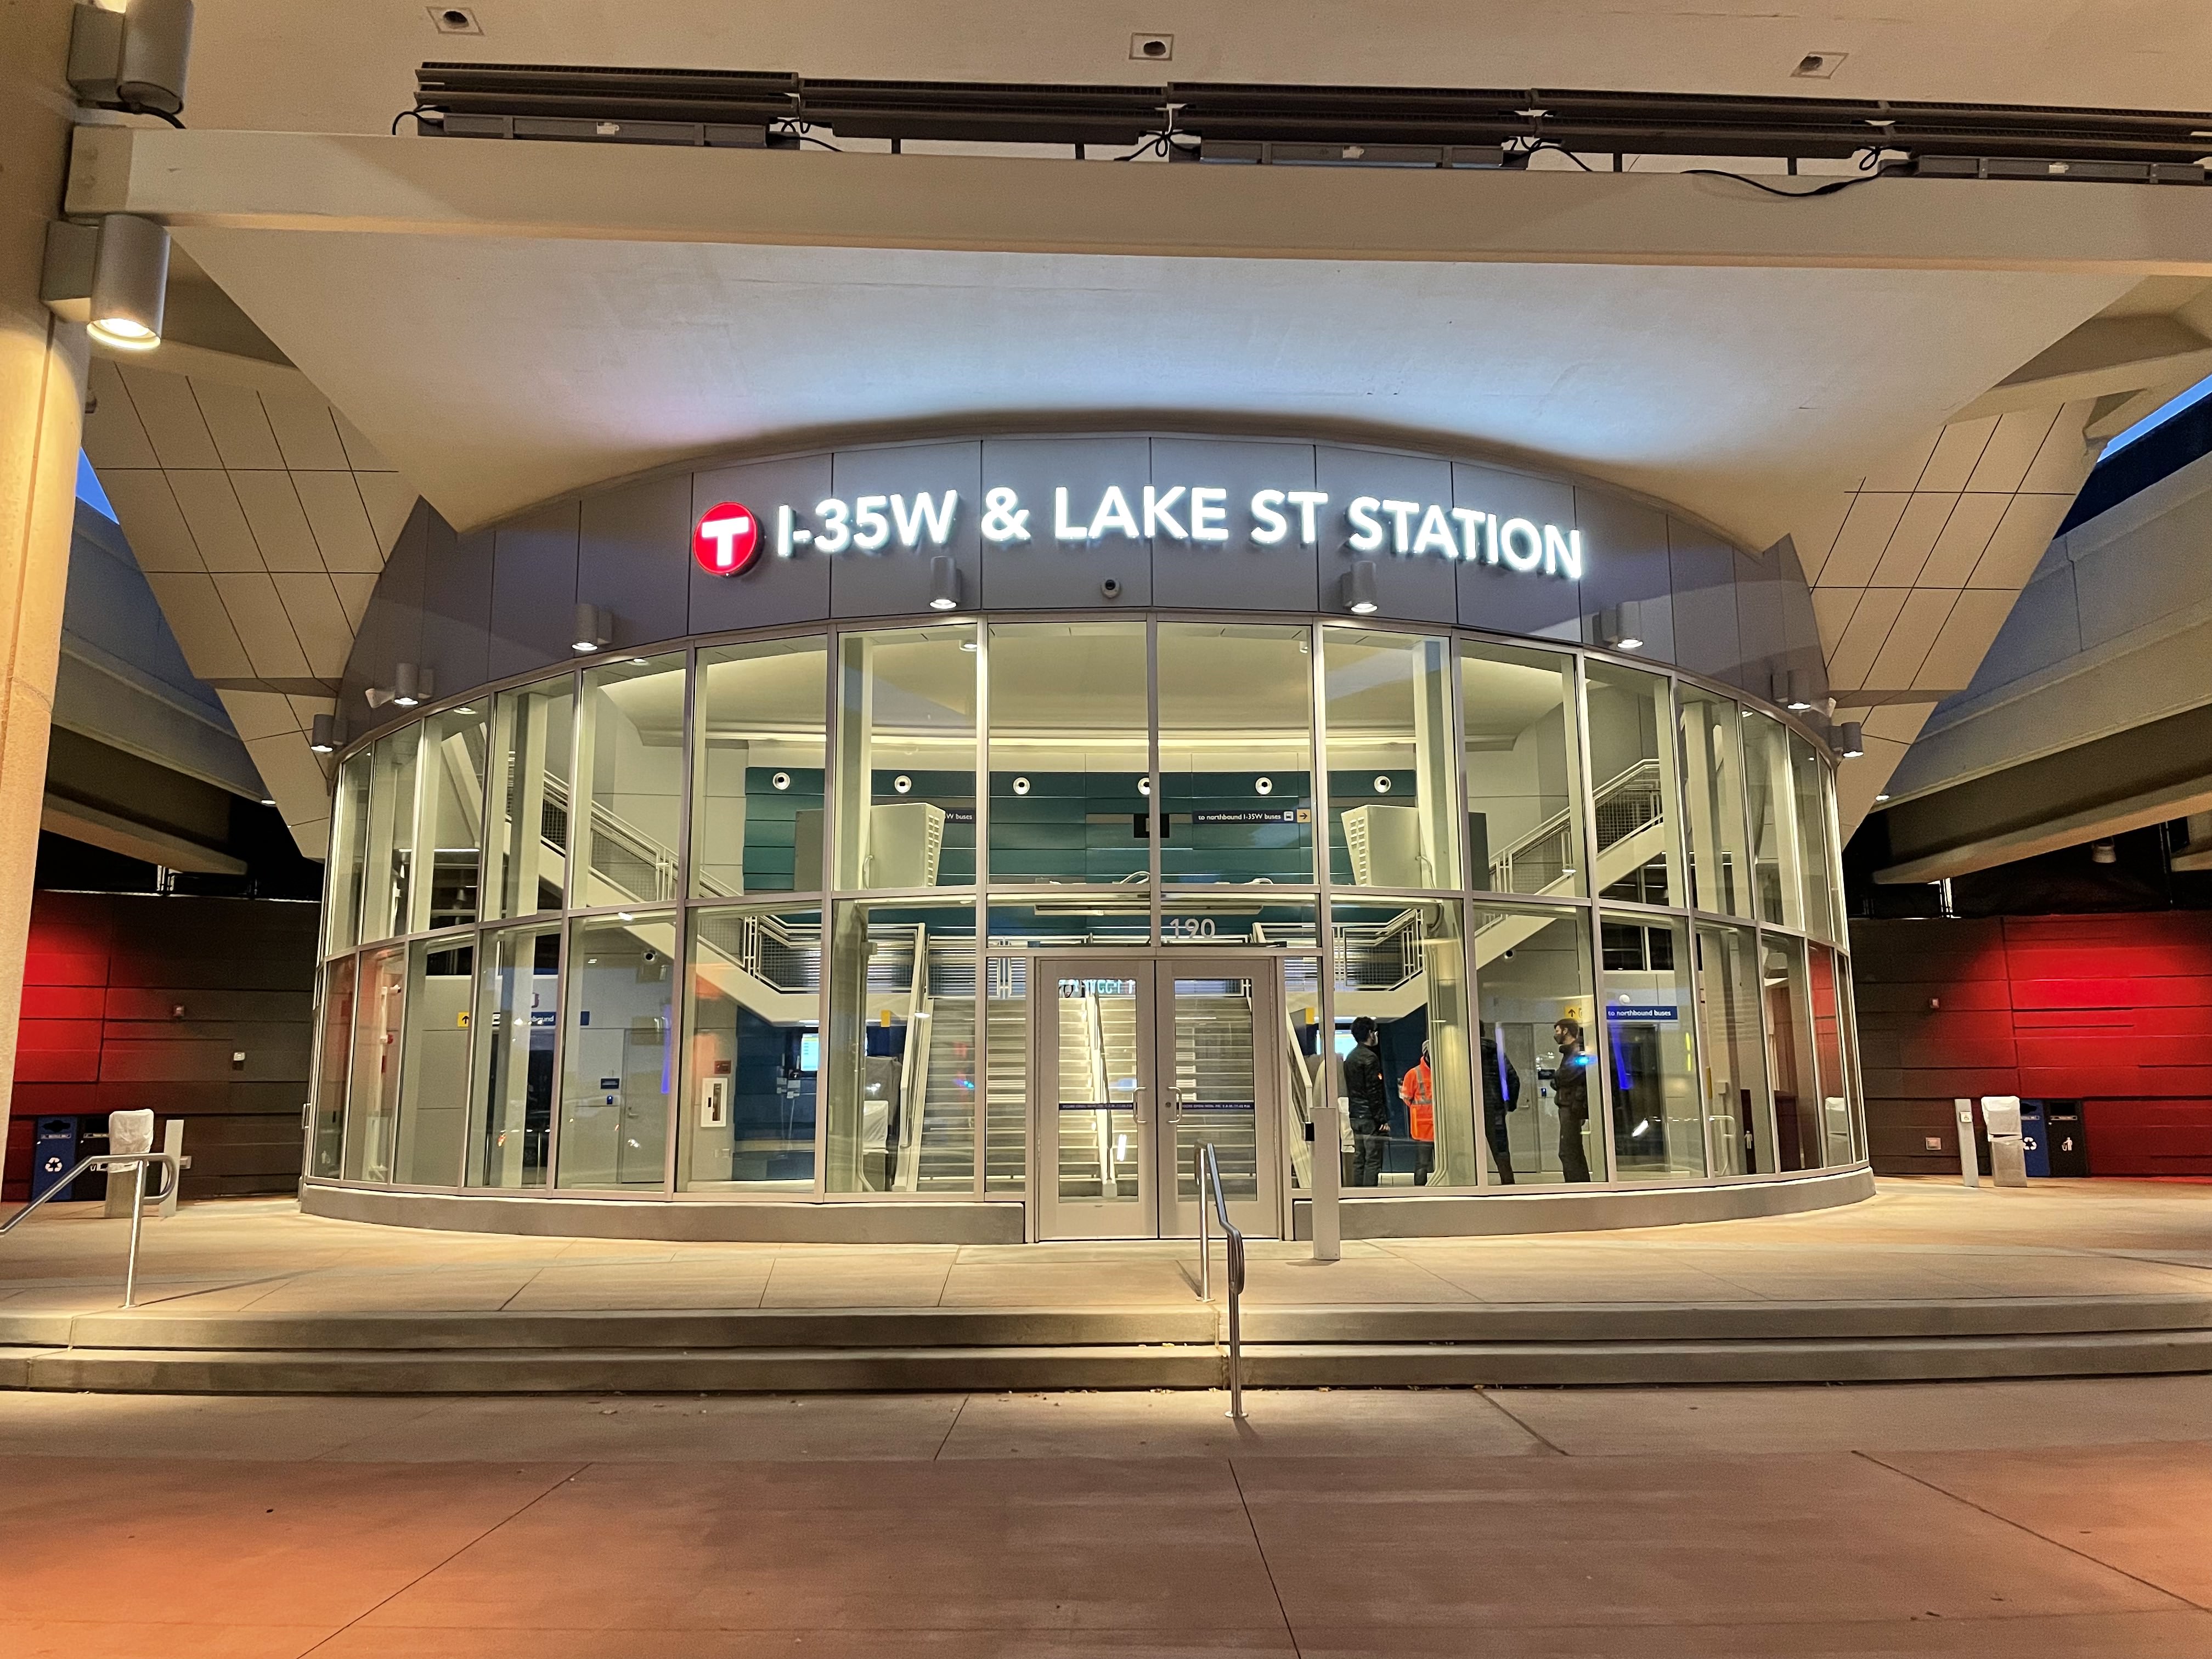 I-35W & Lake Street station - Wikipedia